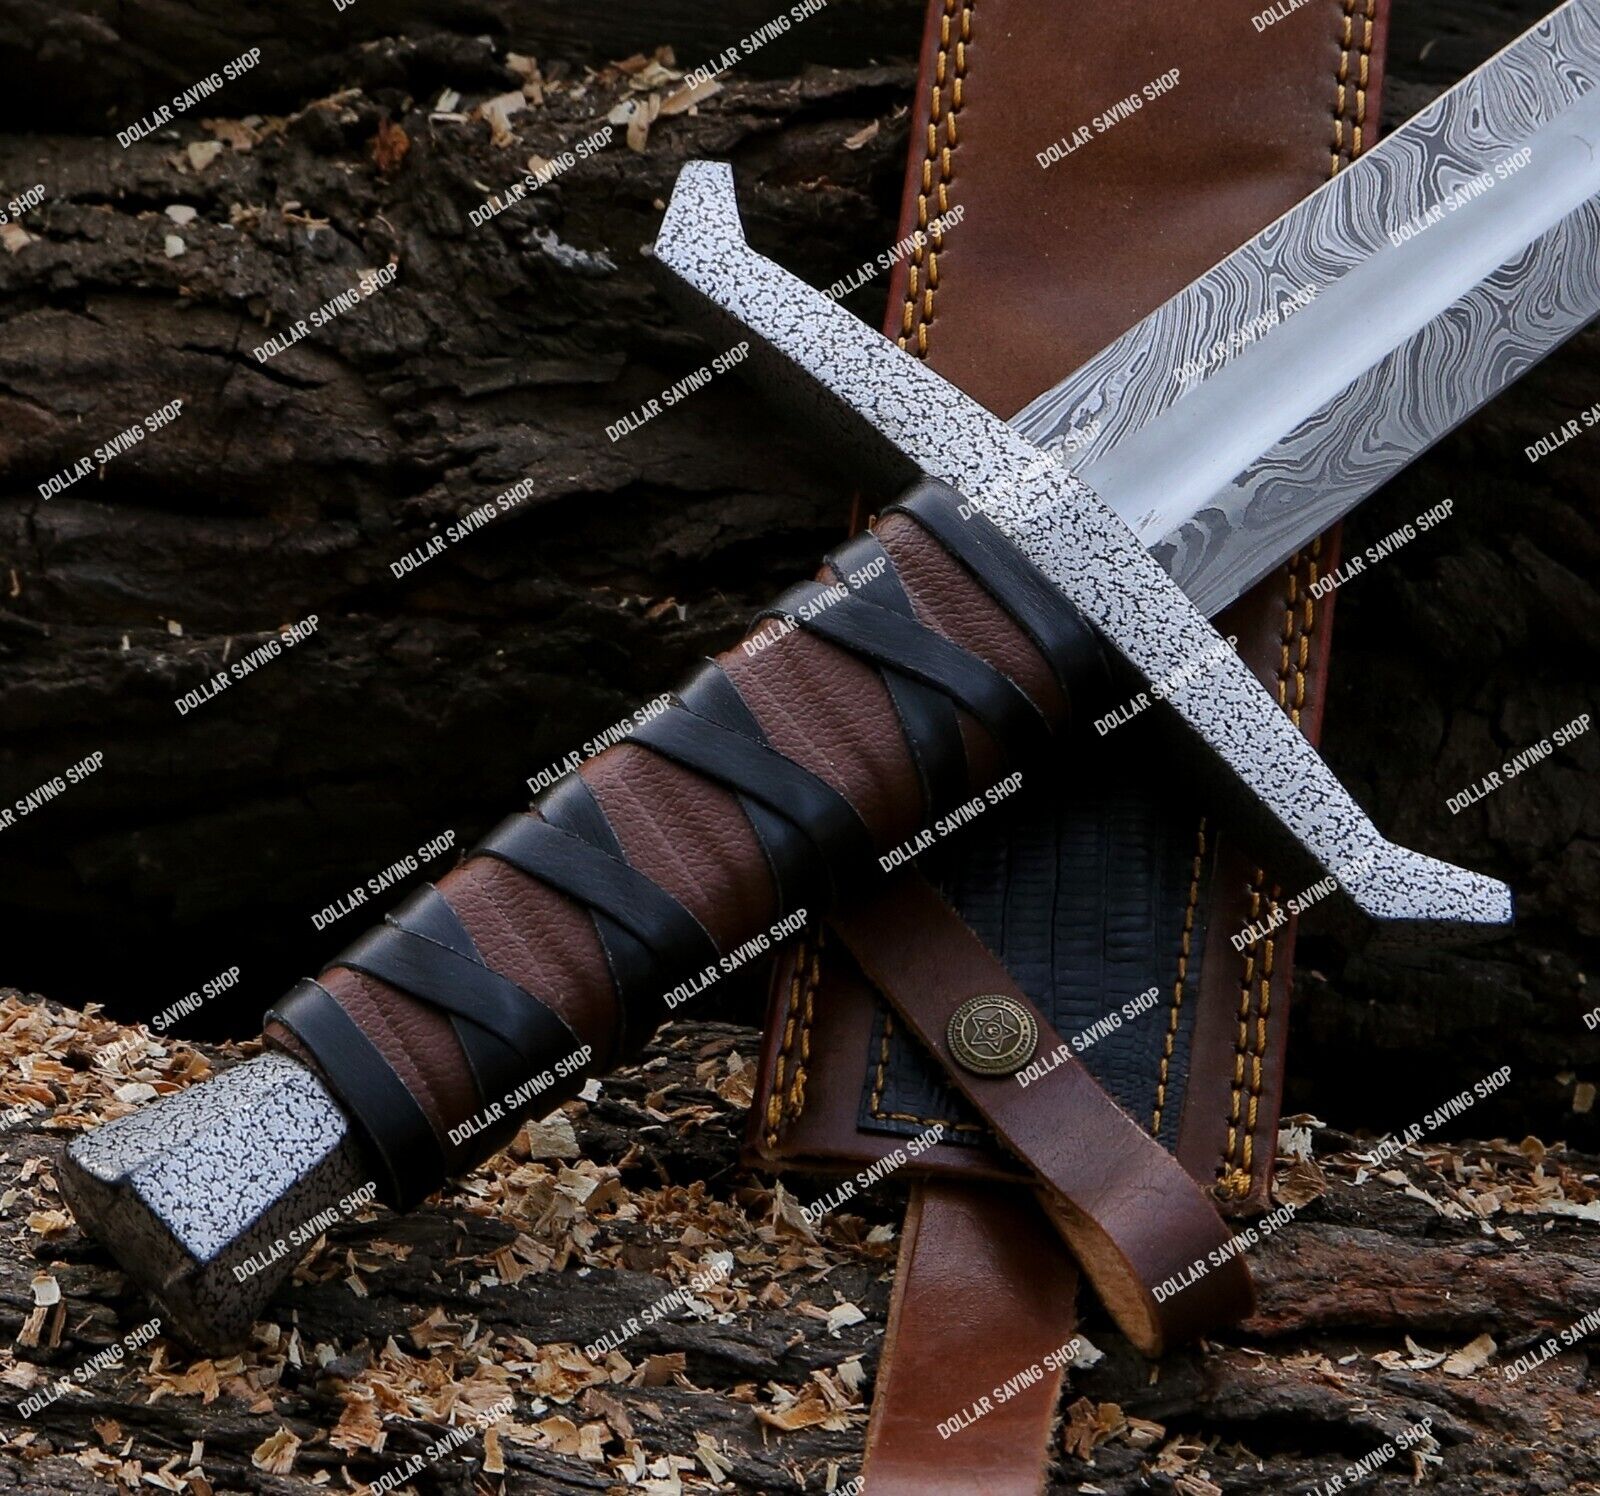 Marvelous Handmade Damascus Steel King Arthur/Medieval Sword With Leather Sheath